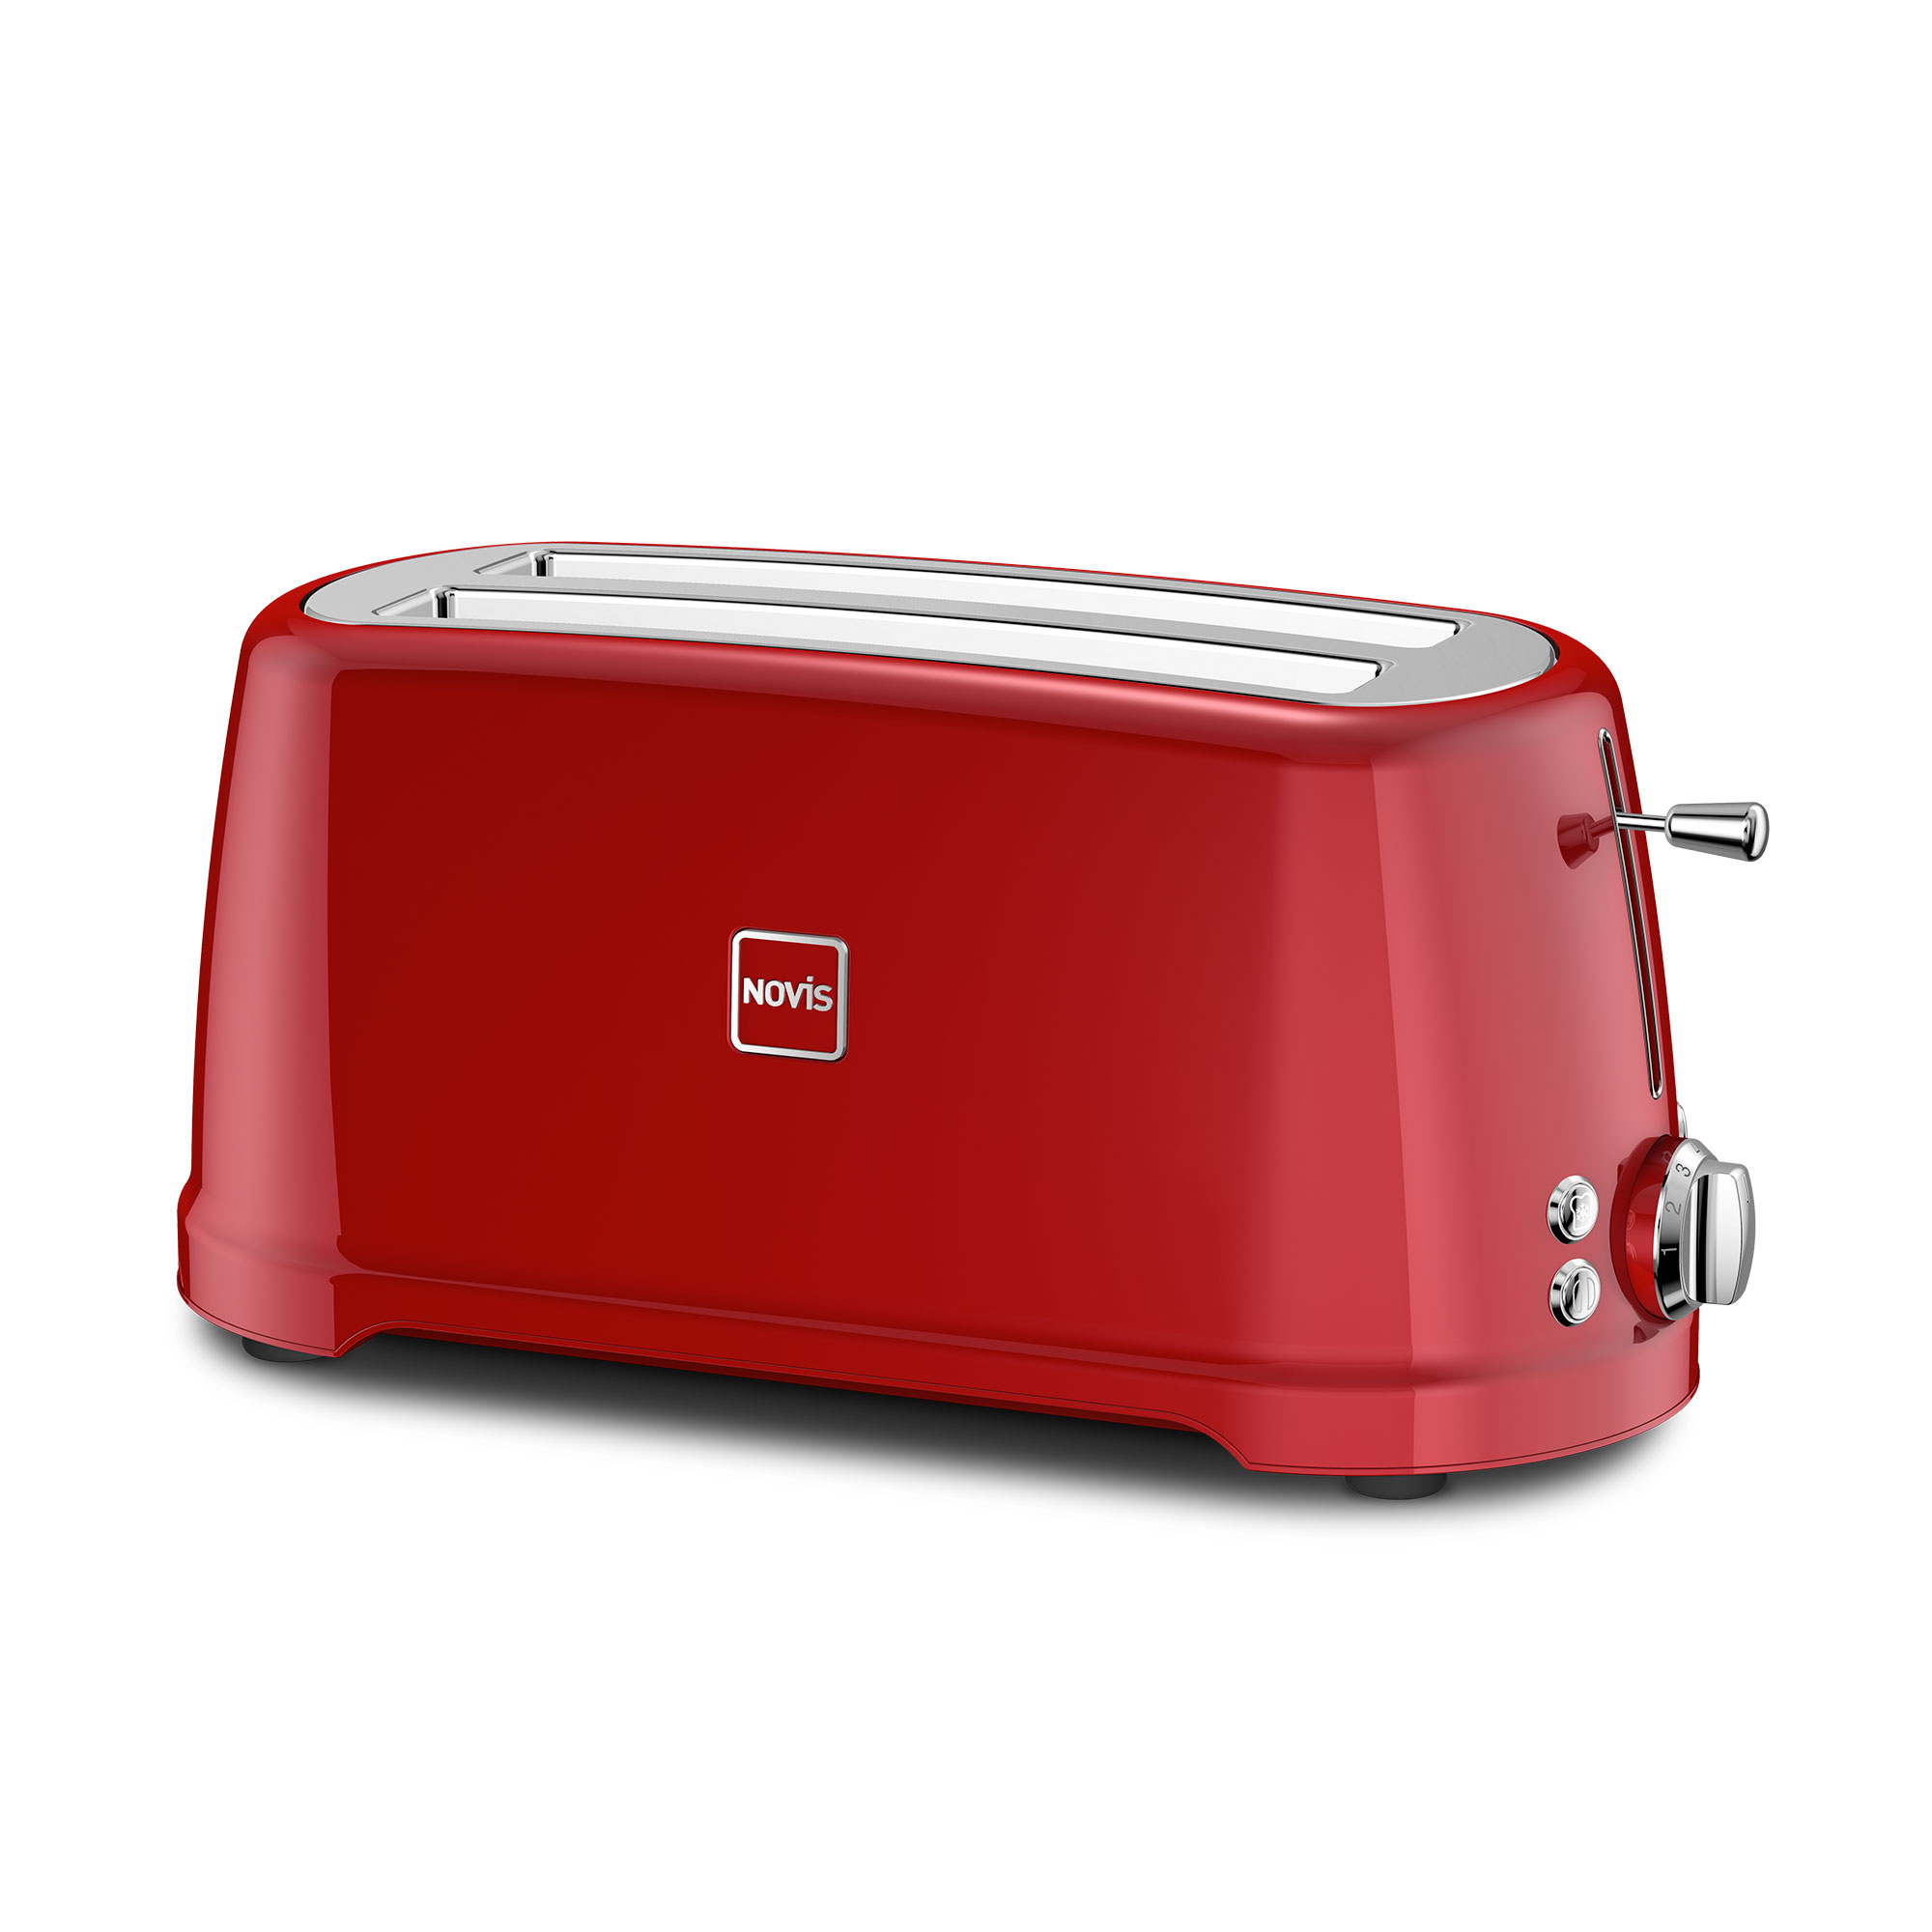 Novis Toaster T4 Red